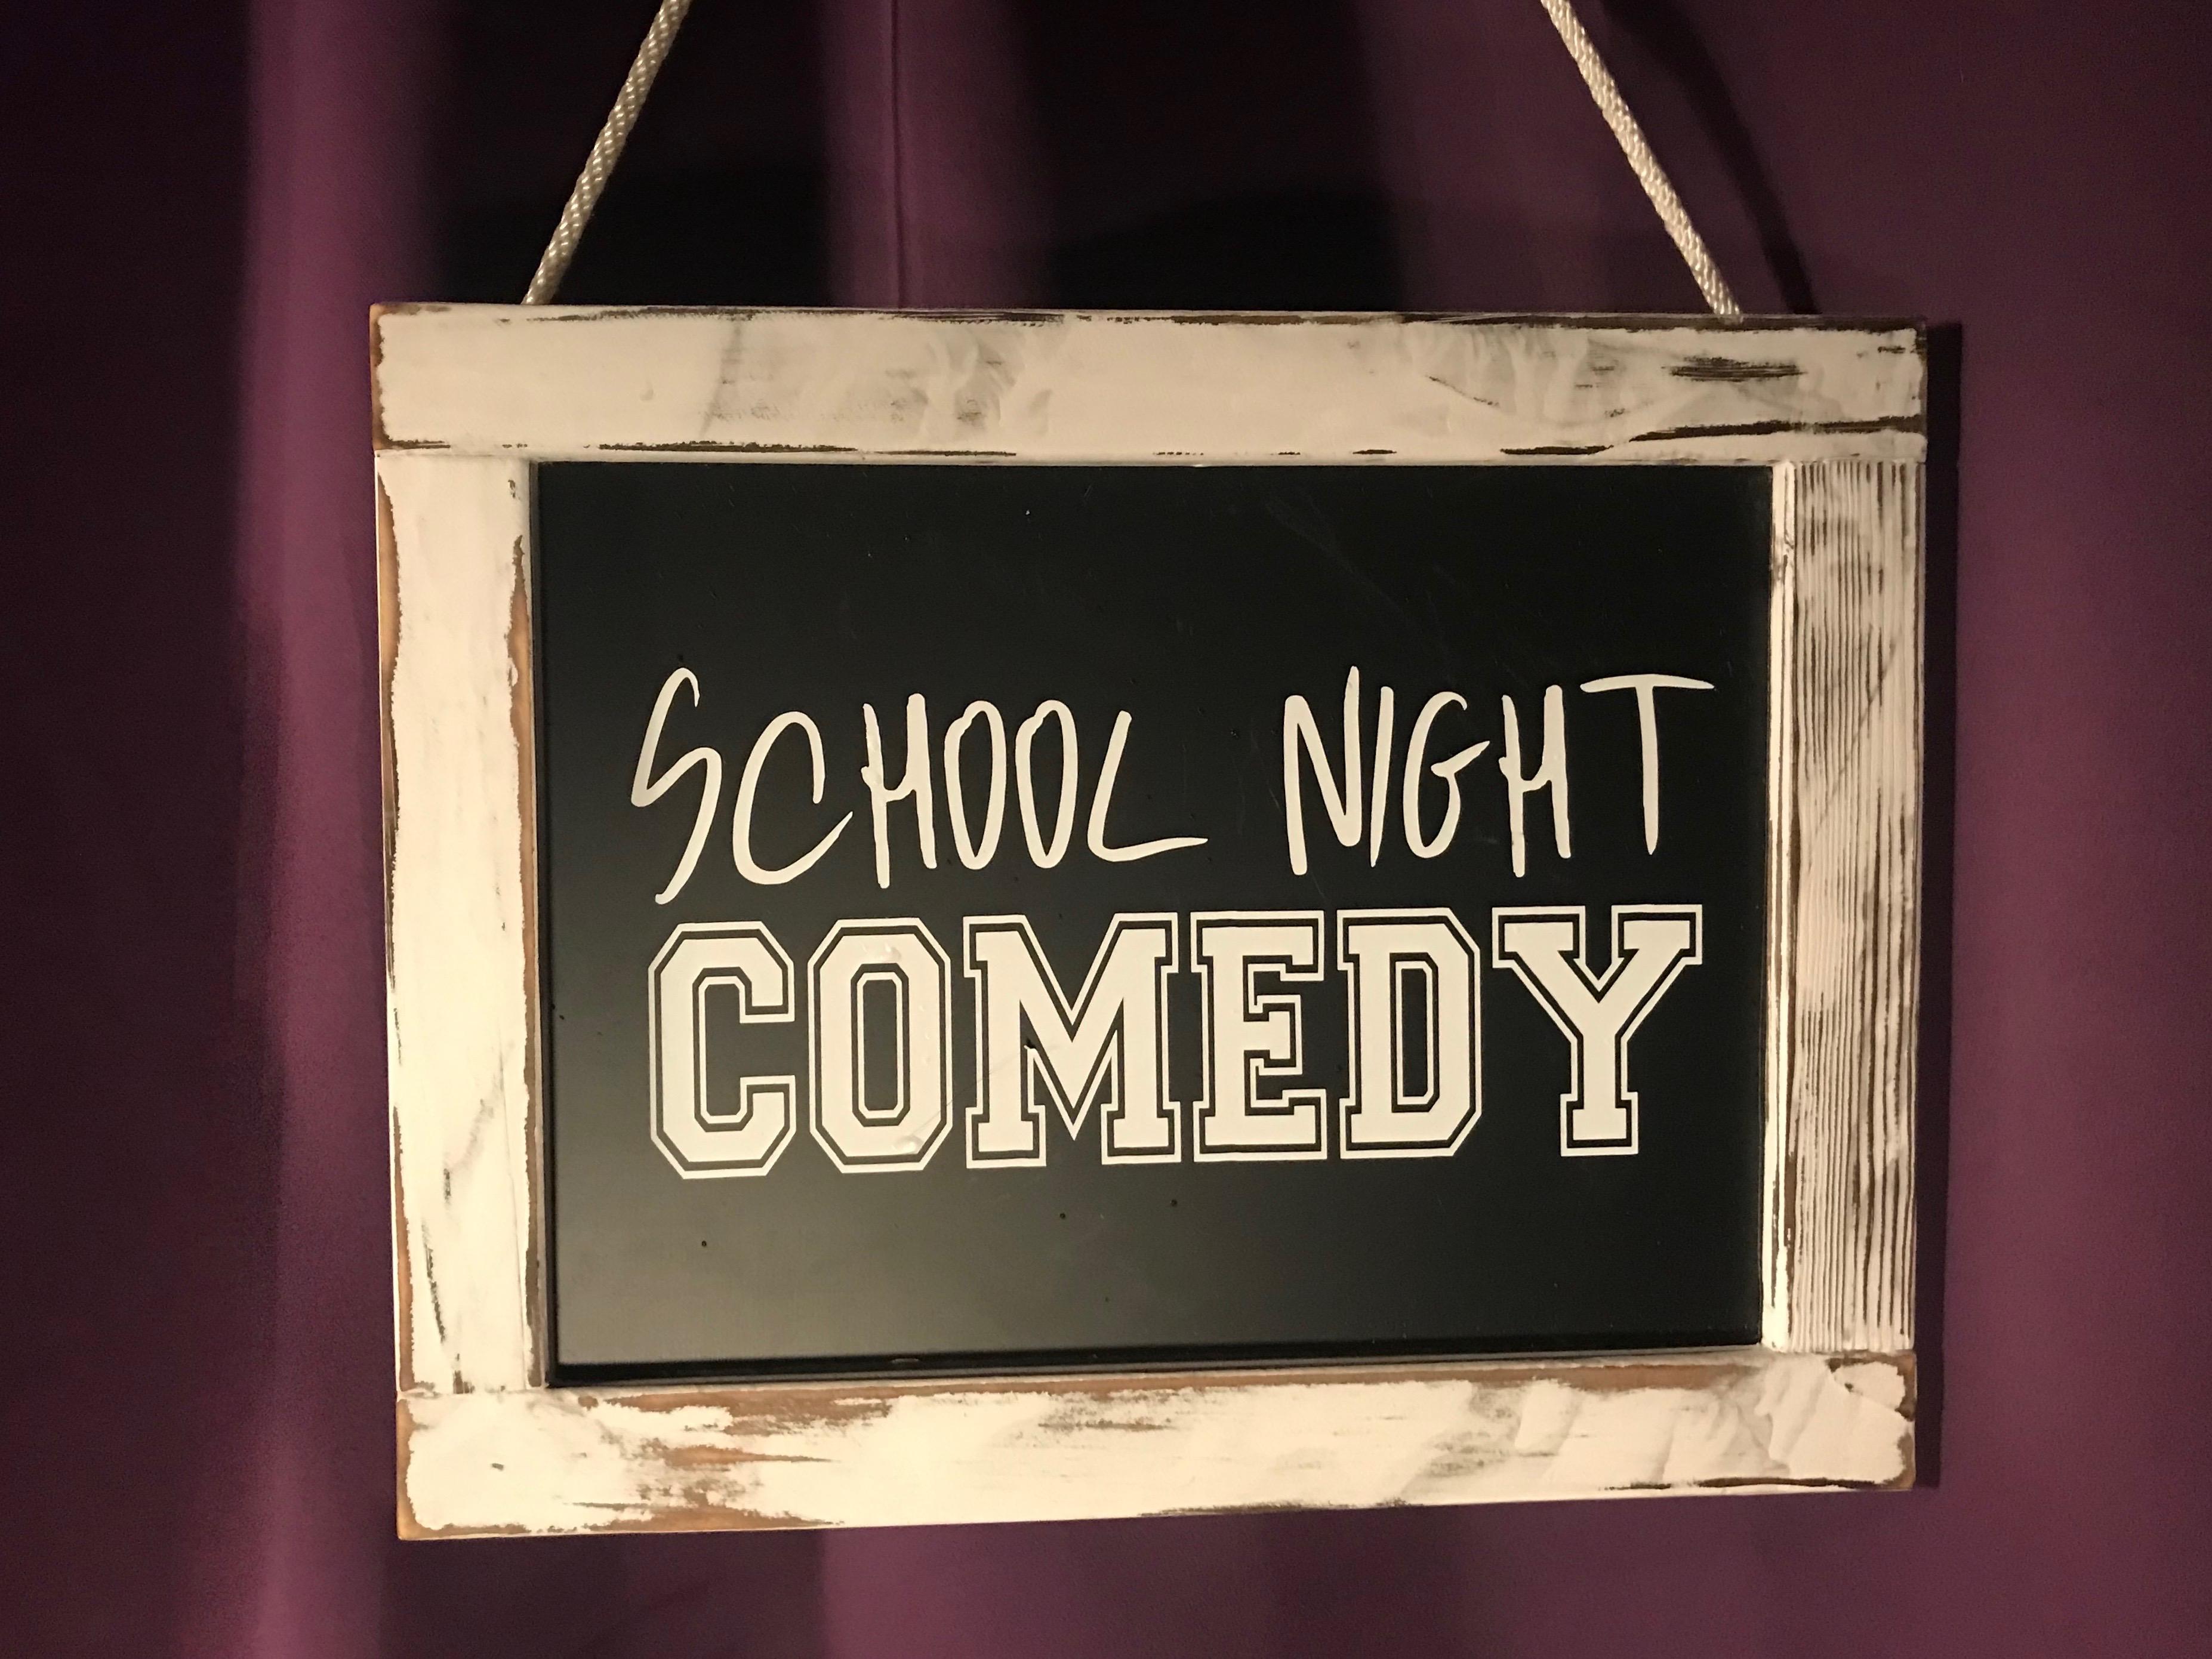 School Night Comedy